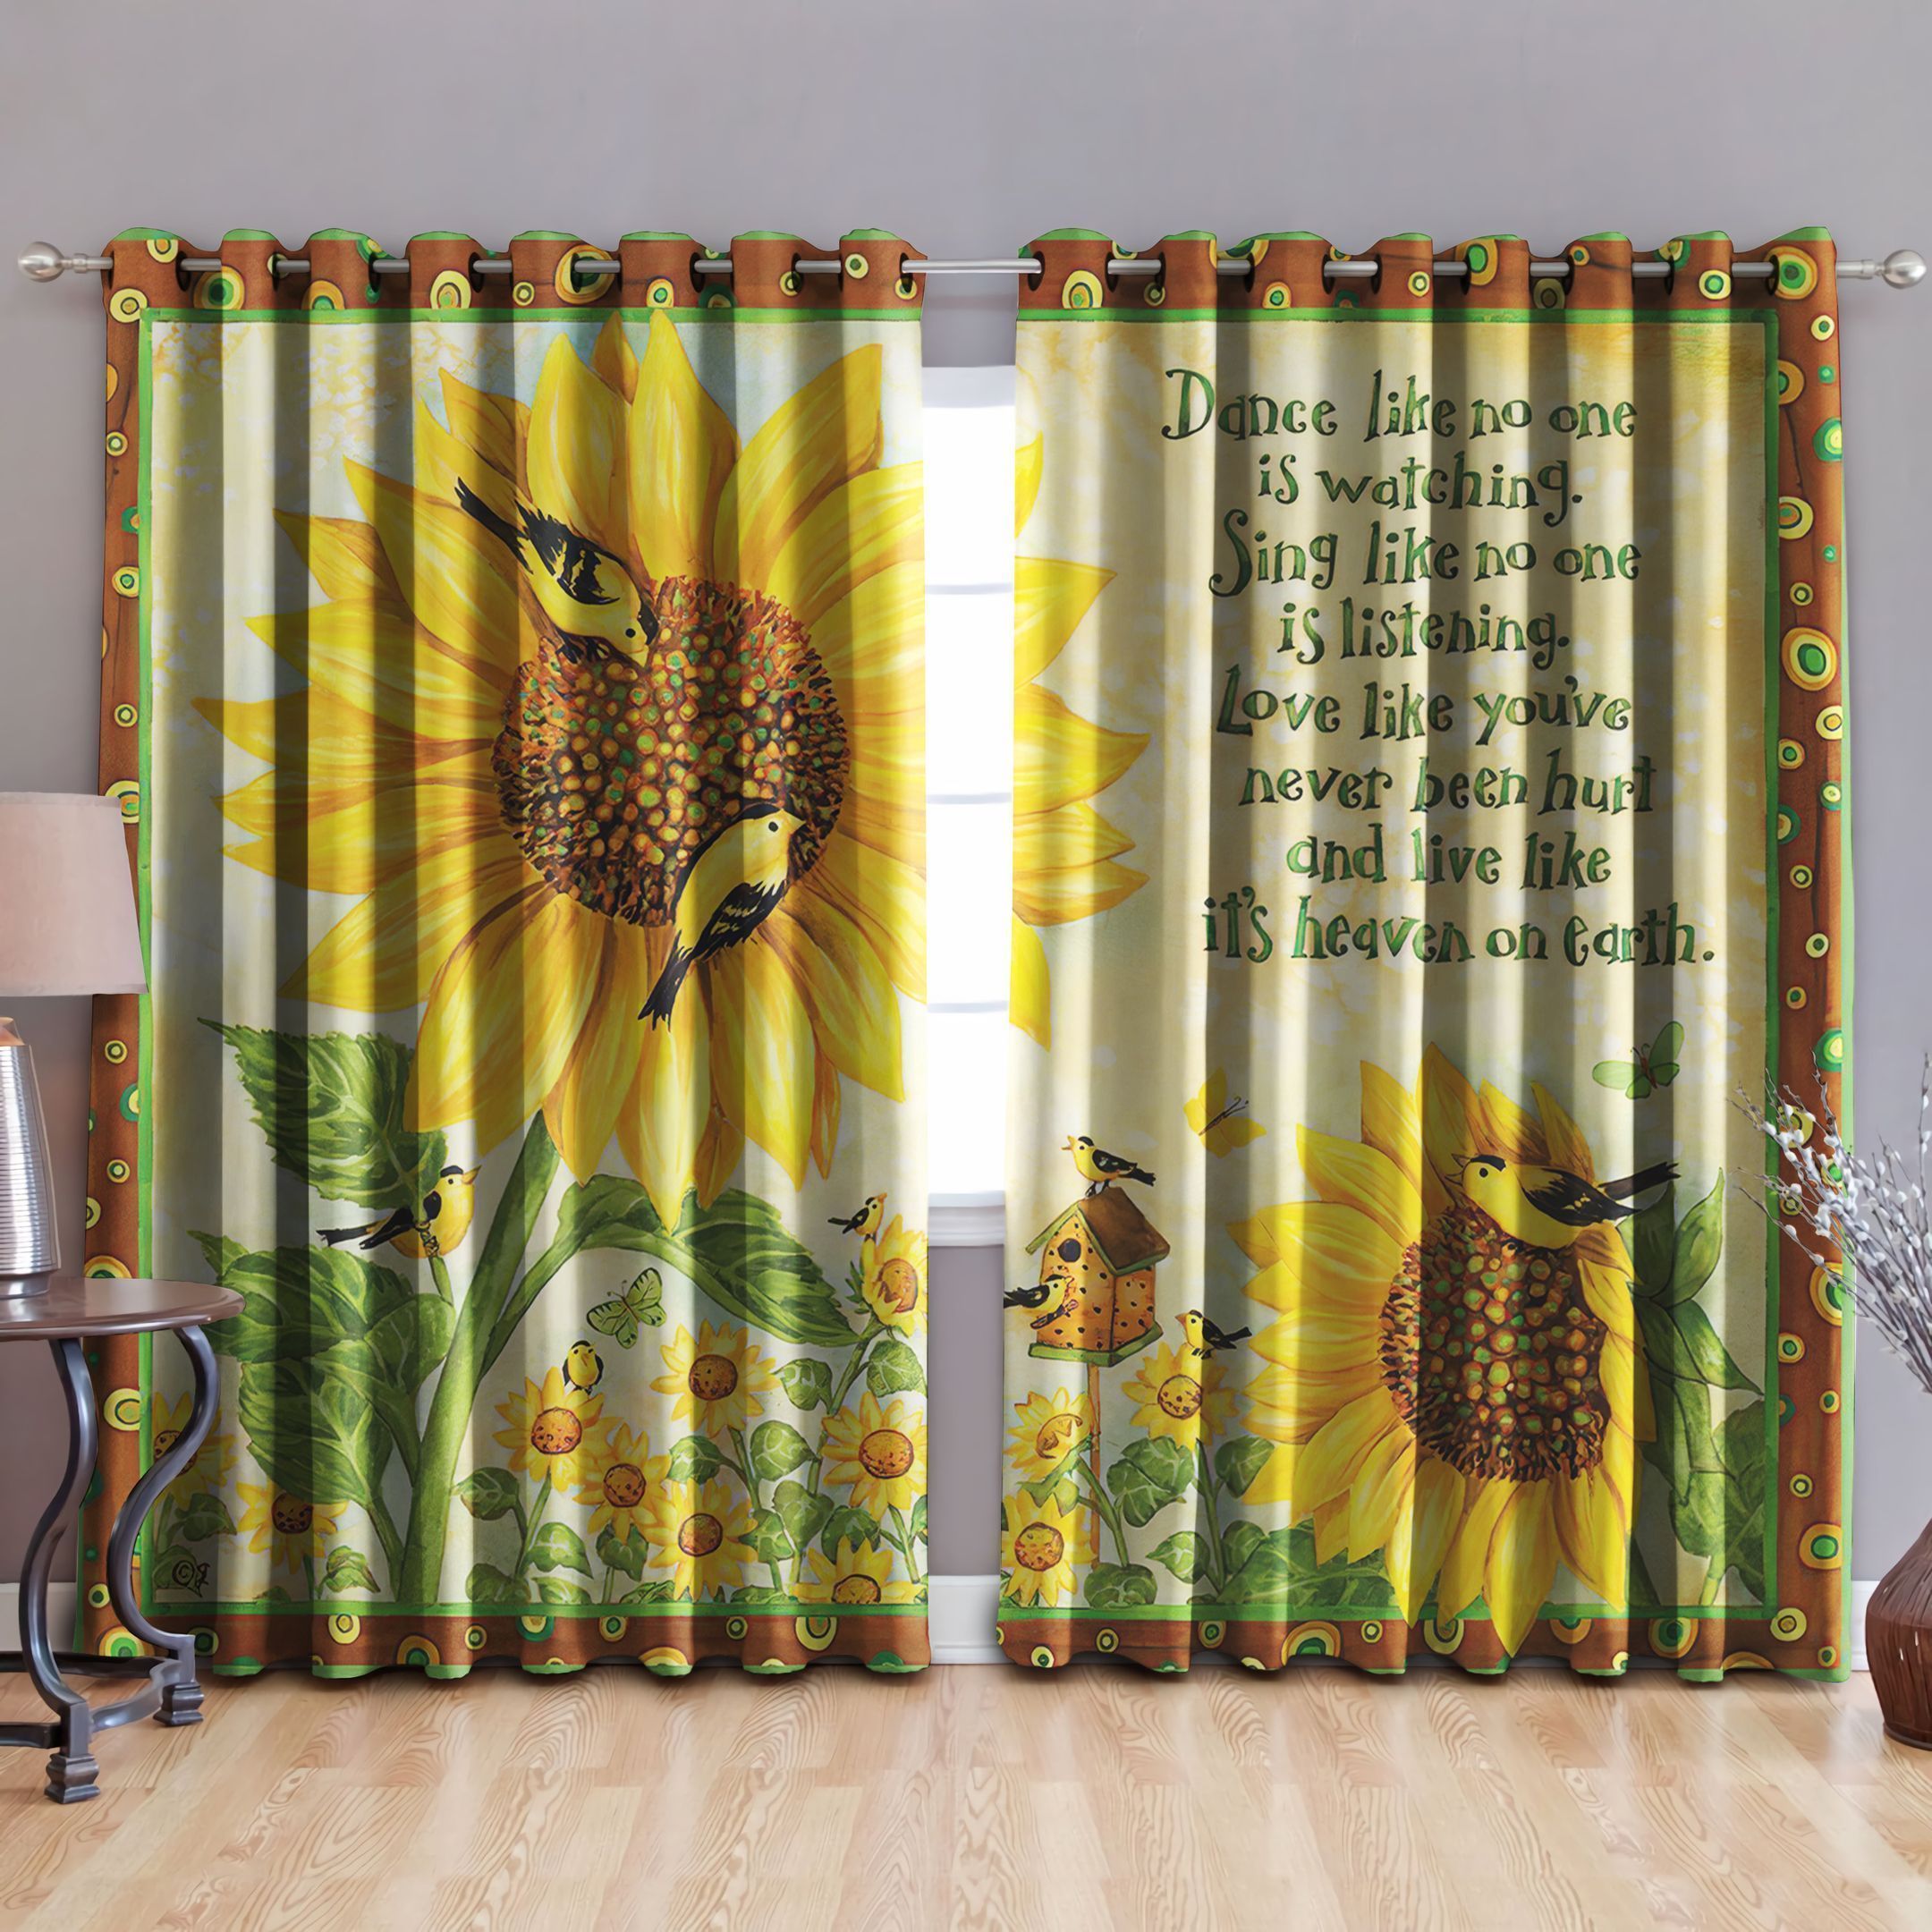 Sunflower Dancing Like No One Watching Printed Window Curtain